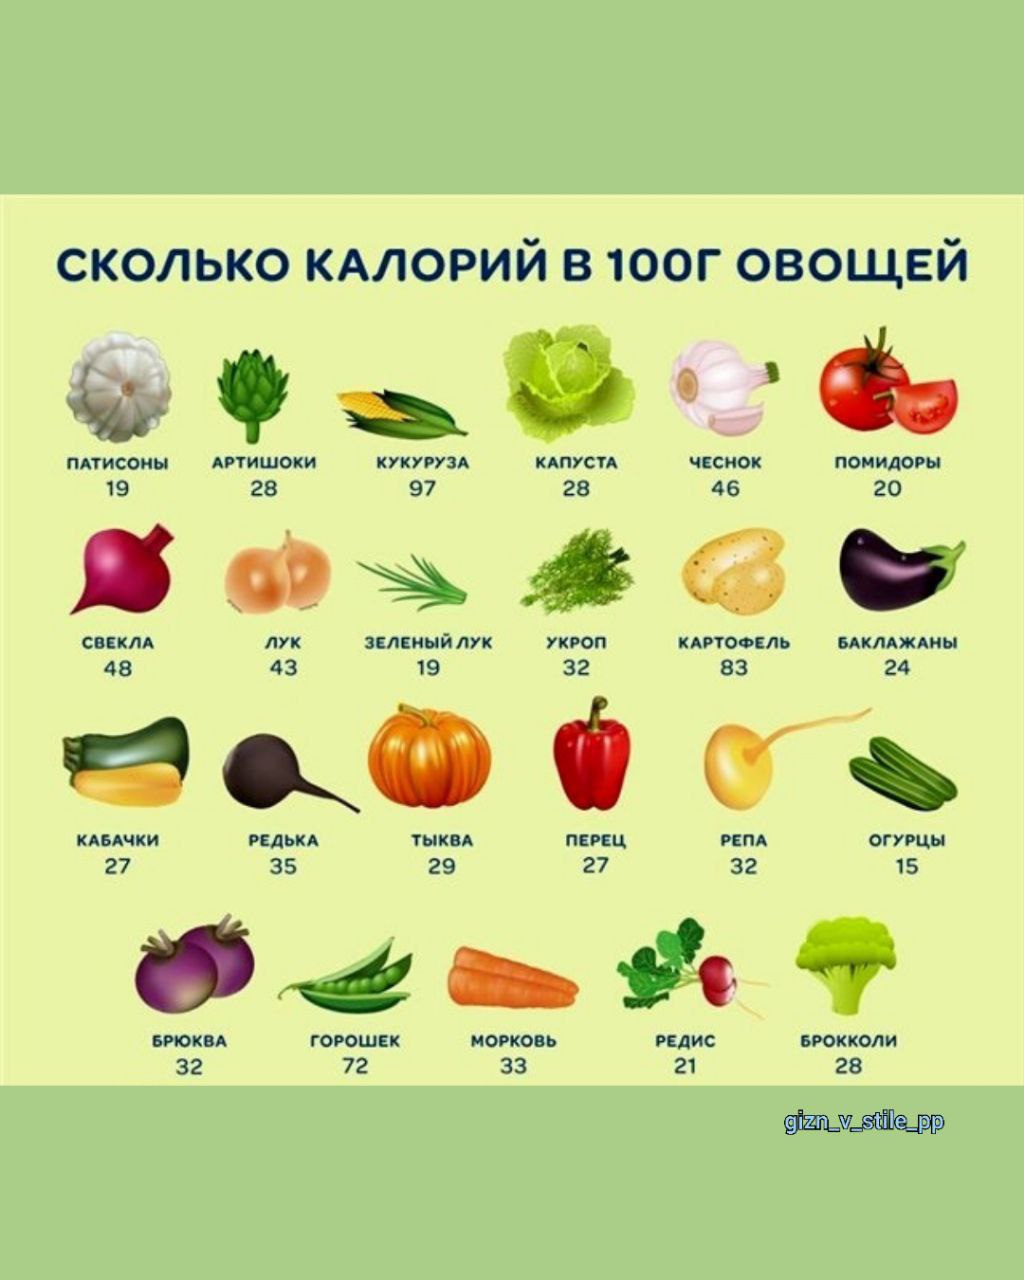 Огурцы помидоры бжу. Количество калорий в овощах. Калорийность овощей таблица. Углеводы в овощах таблица на 100 грамм. Калорийность овощей таблица на 100 грамм.